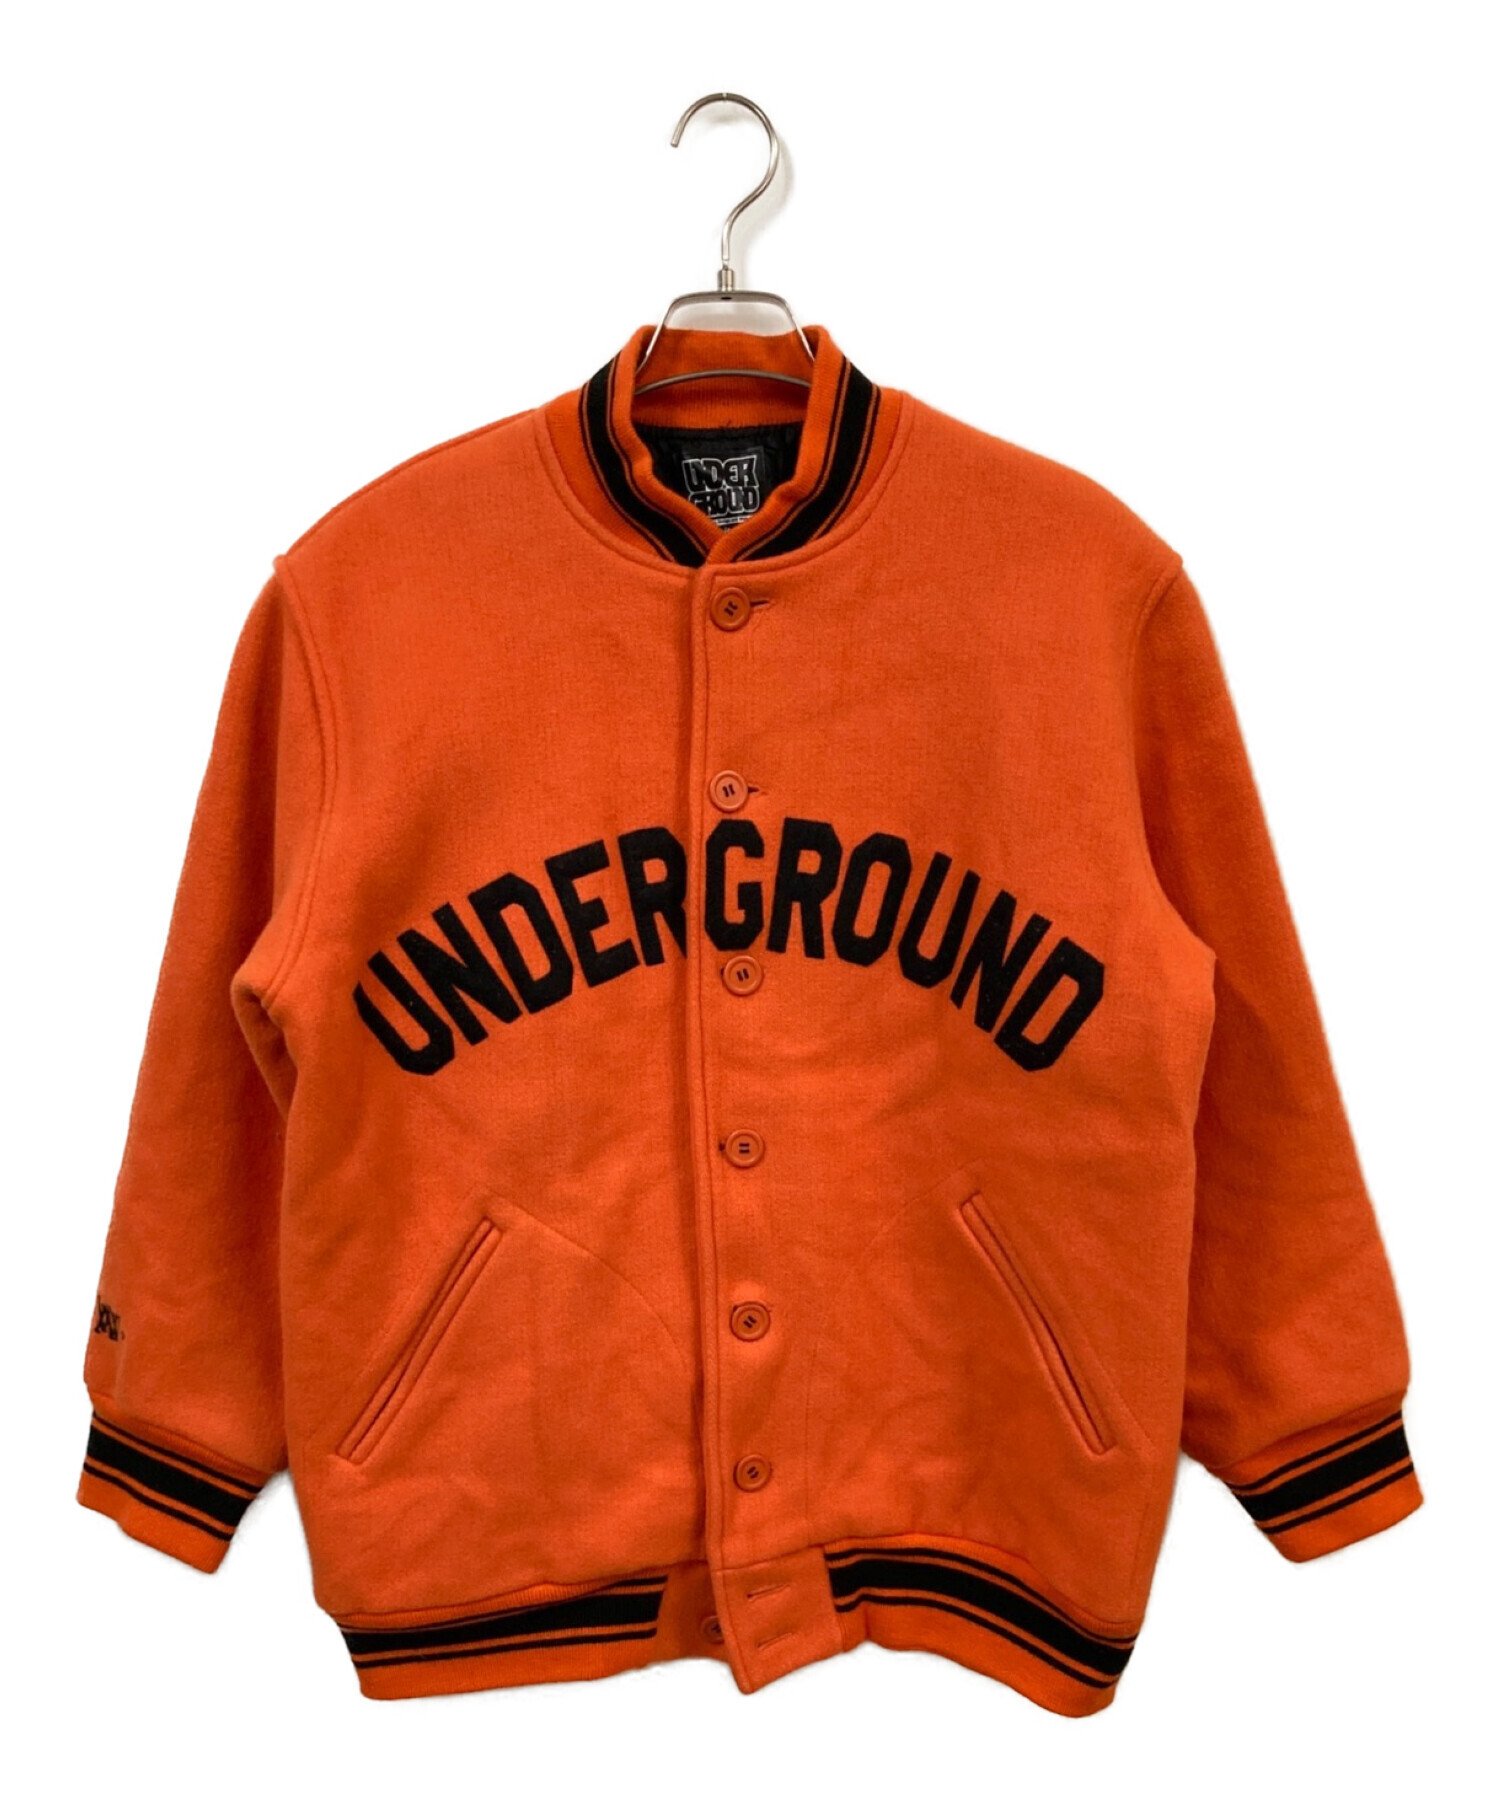 Underground (アンダーグラウンド) スタジャン オレンジ サイズ:XL